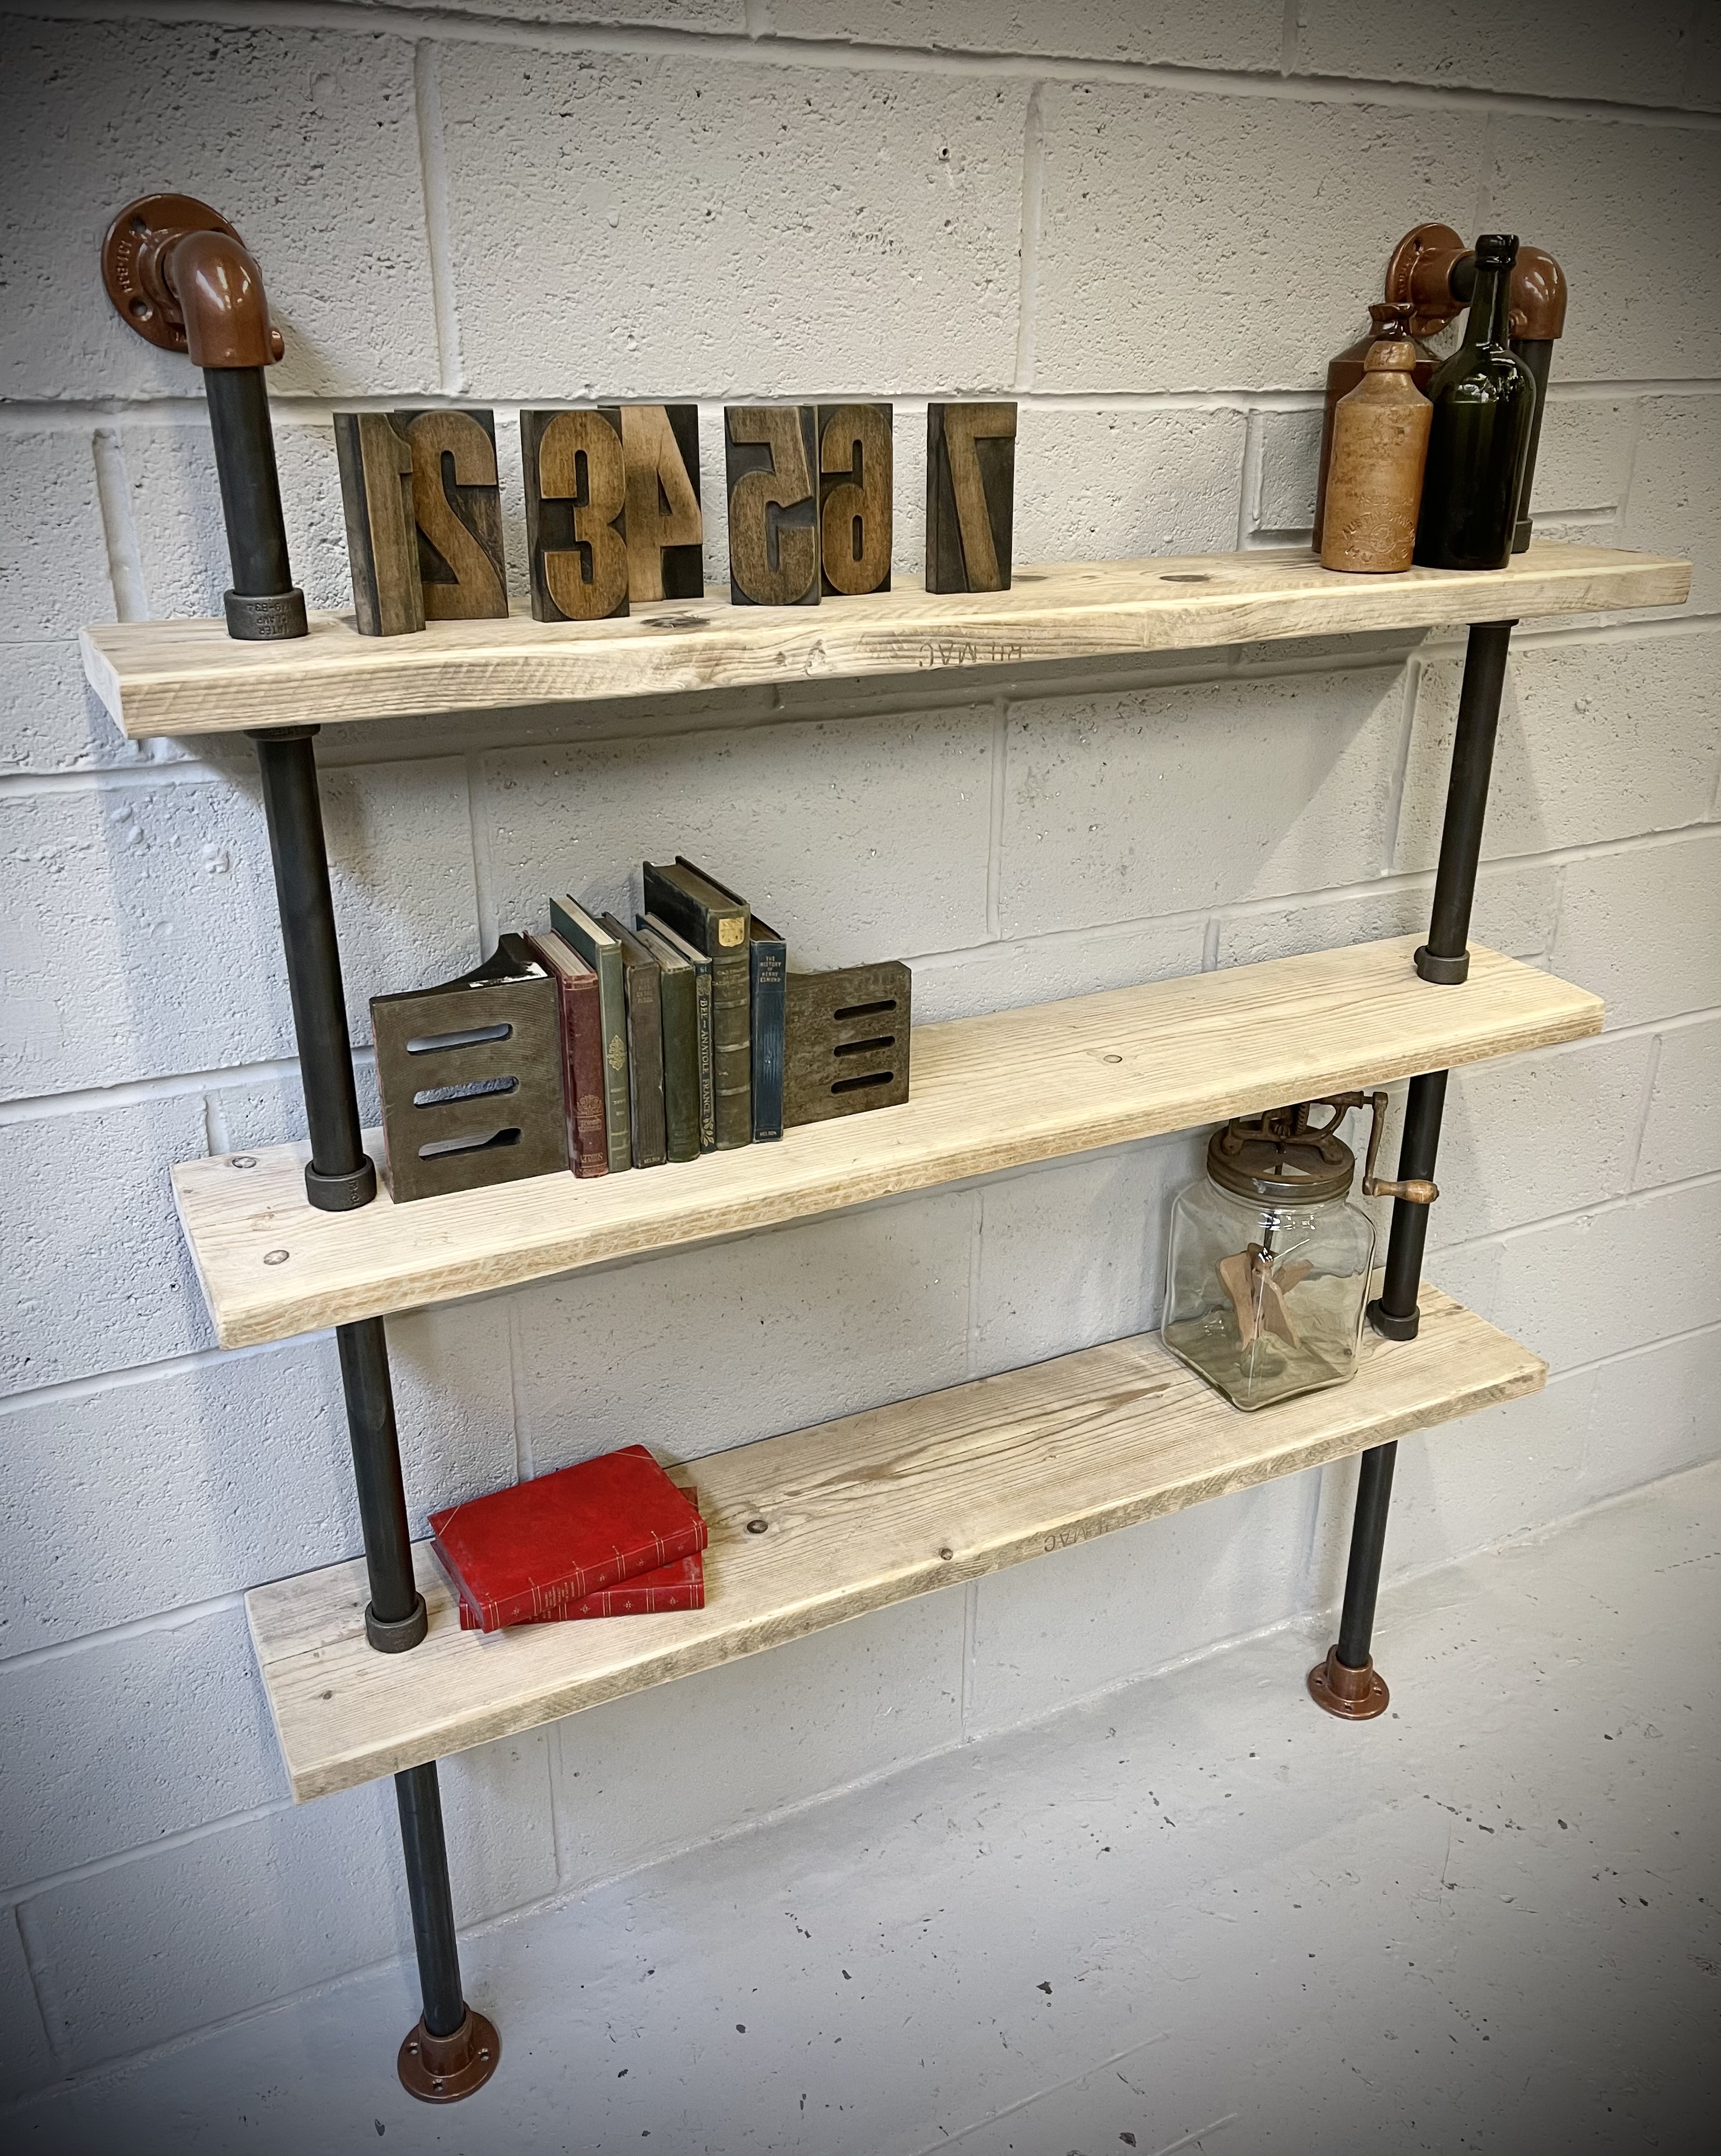 Pipe & Reclaimed Wood Scaffold Board Vintage Industrial Shelves Bookcase 3 Feet 